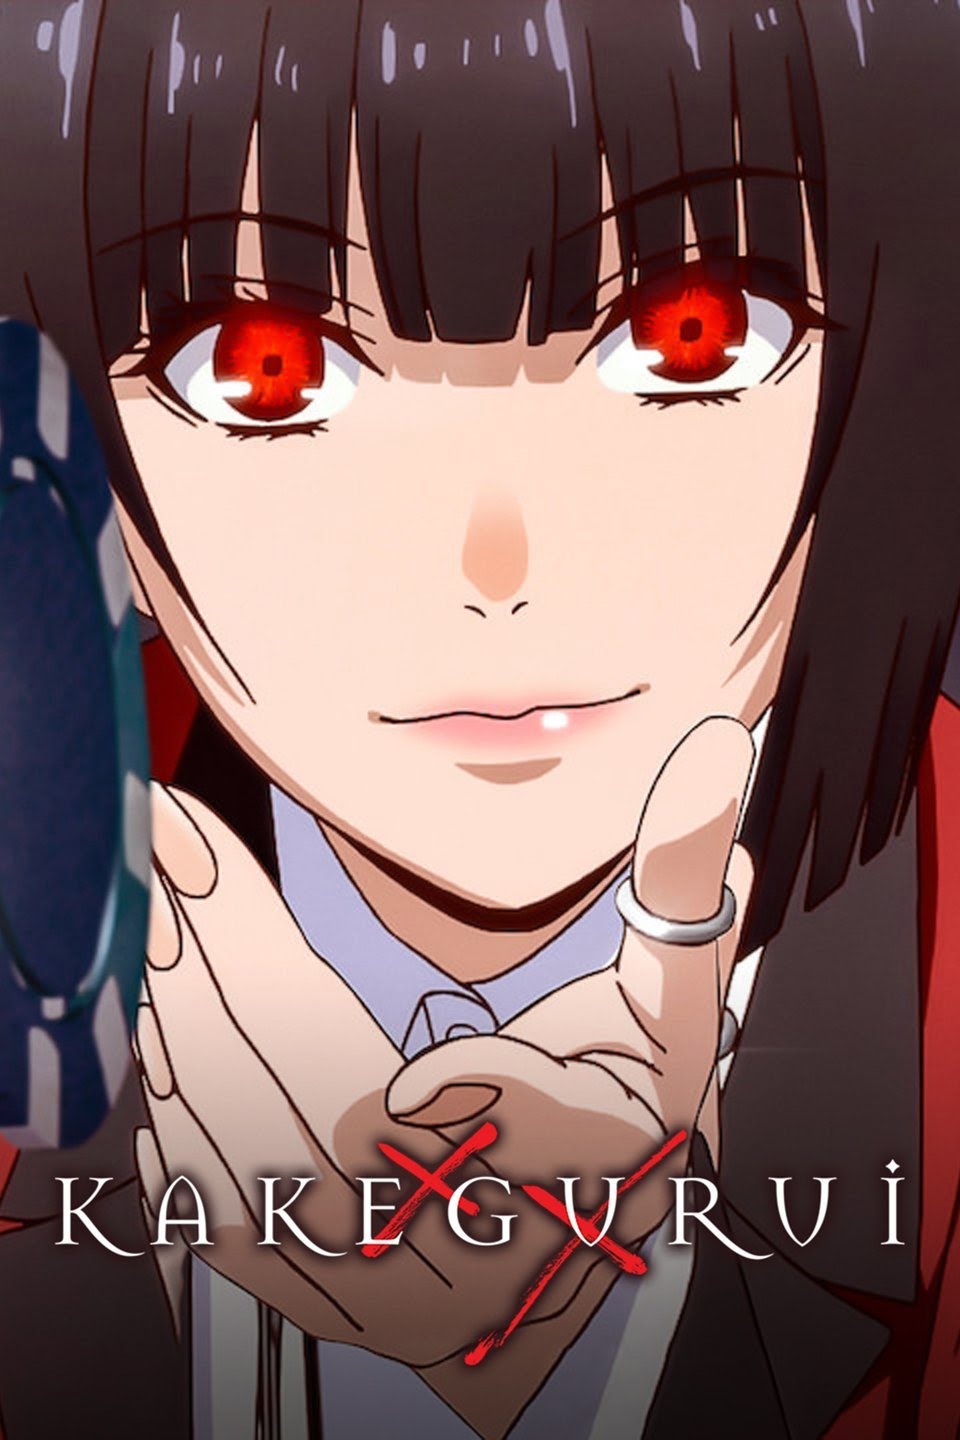 Kakegurui Anime Season 2 Campaign!